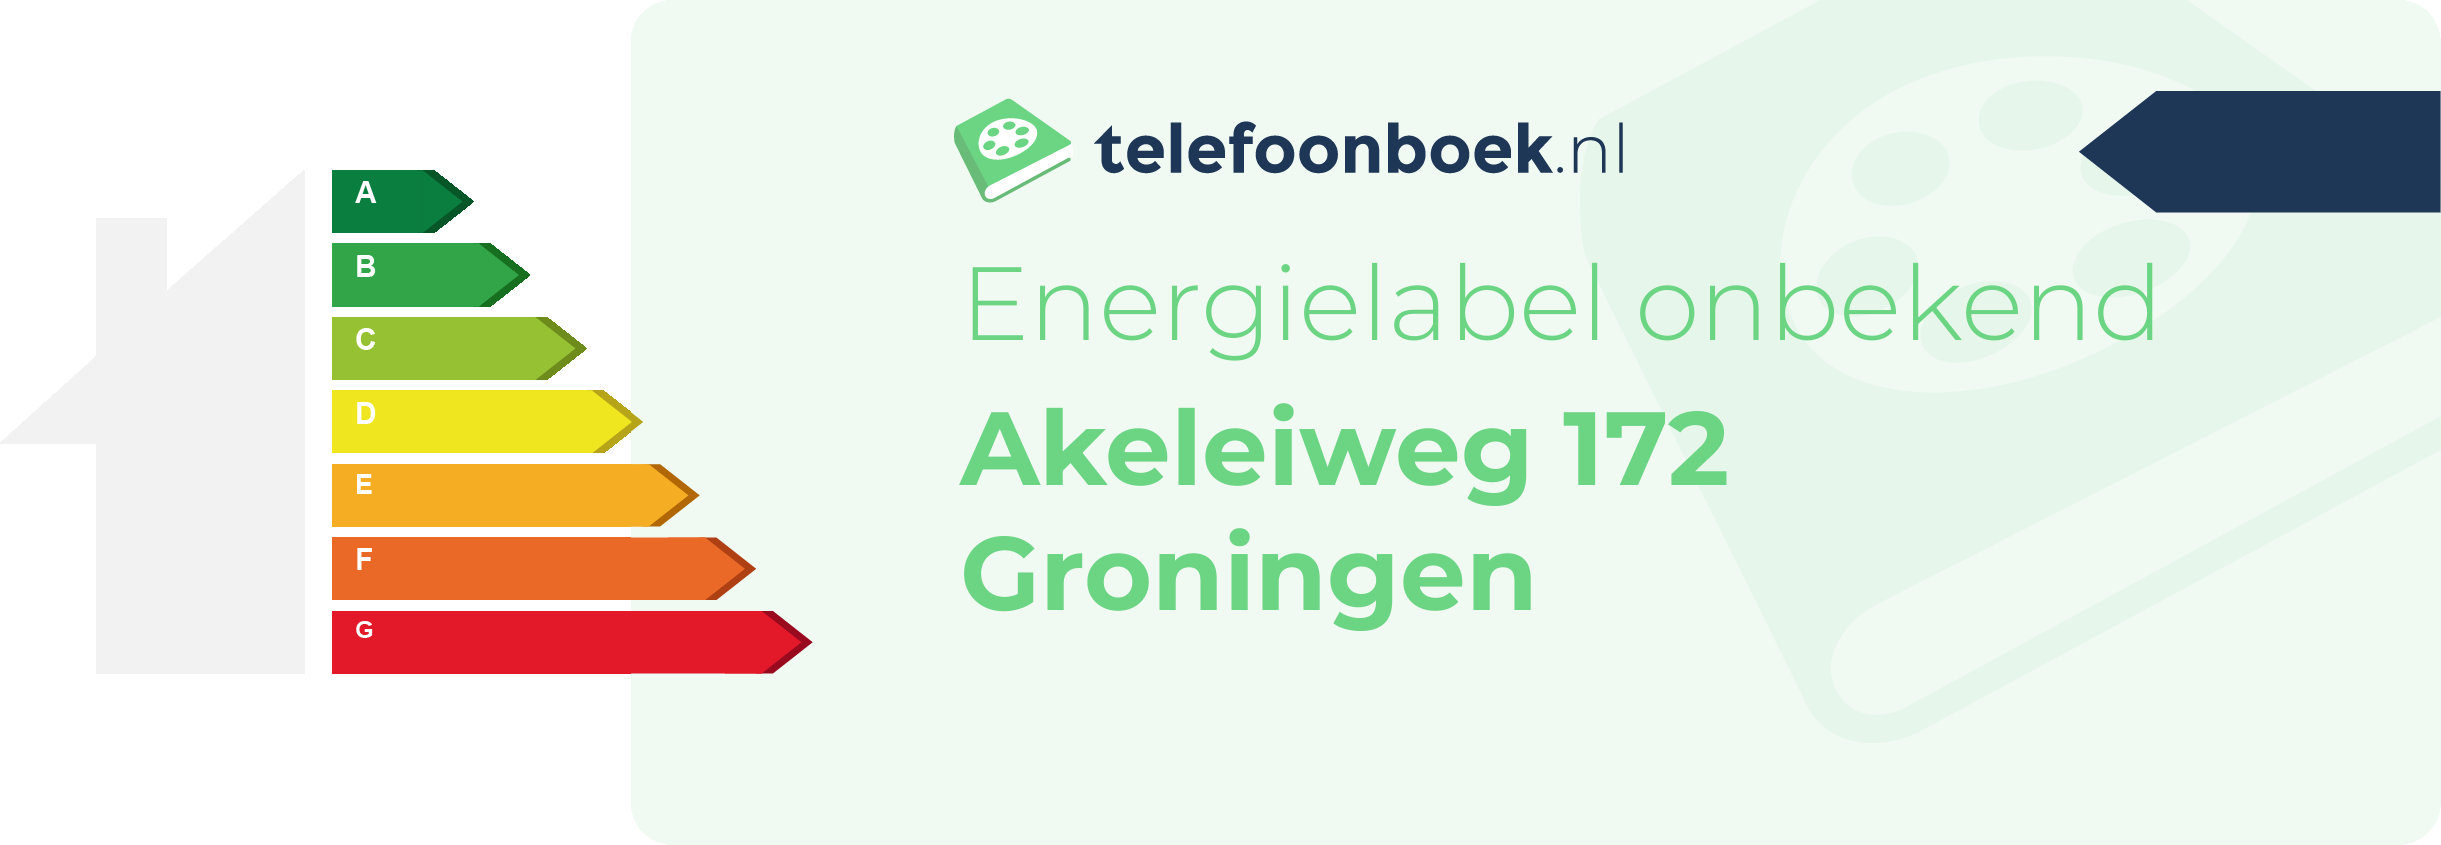 Energielabel Akeleiweg 172 Groningen